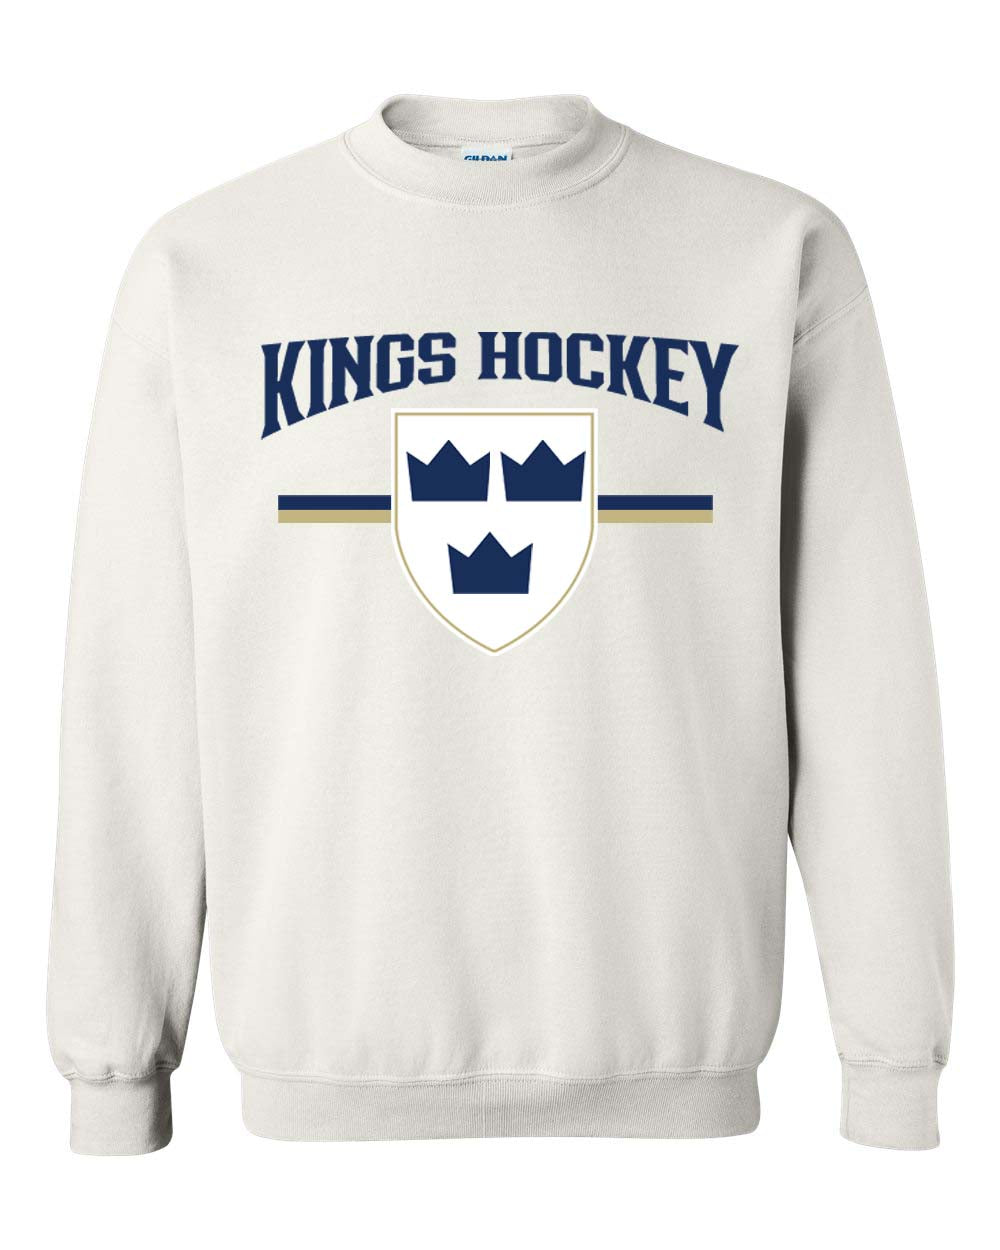 Kings Hockey Design 5 non hooded sweatshirt